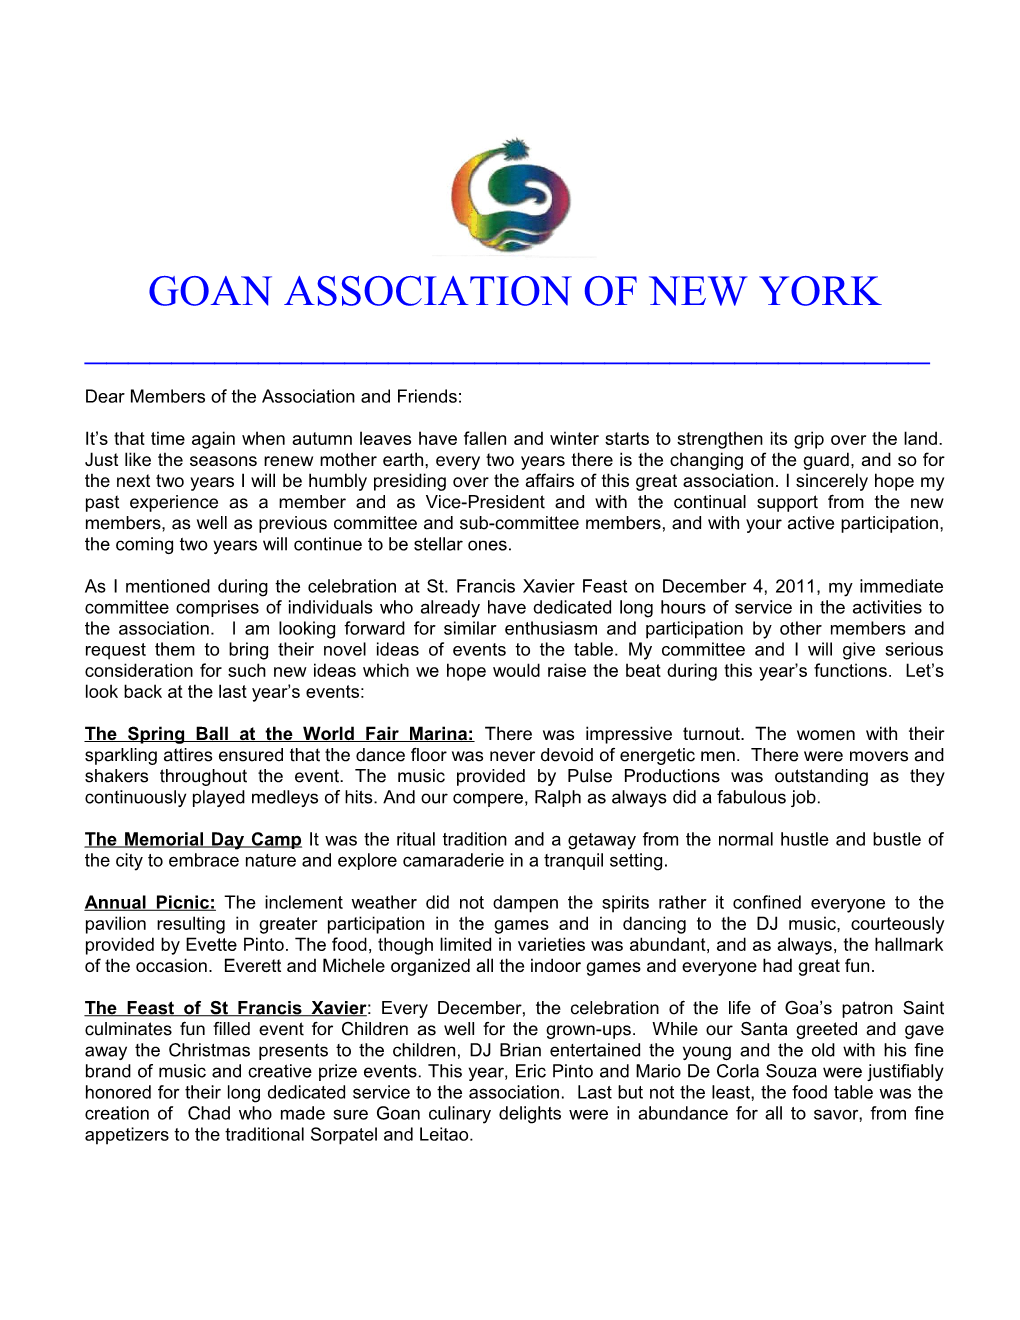 Goan Association of New York